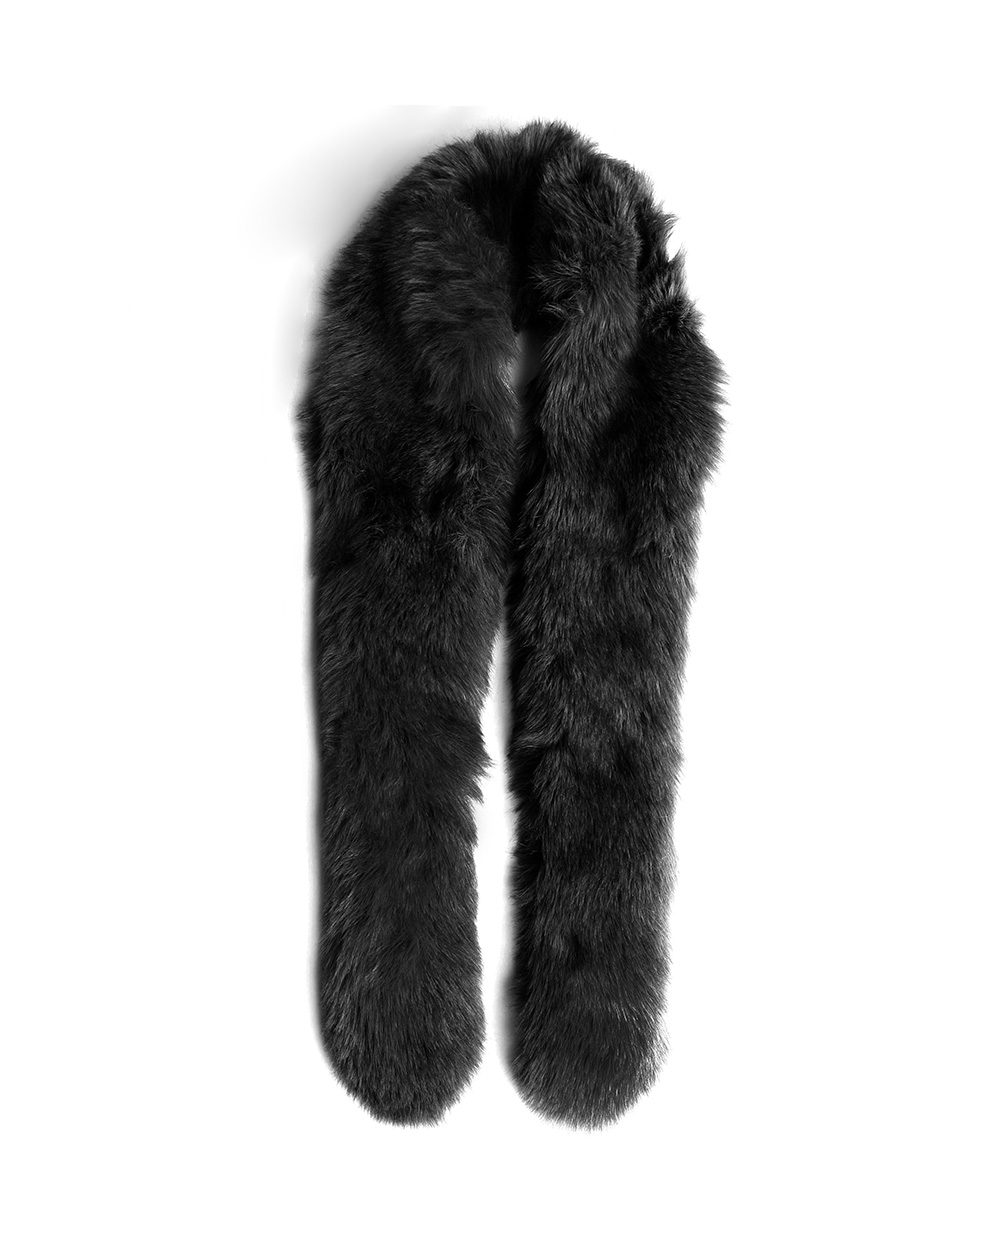 Mr. Fur Stole, $149.99, from Moochi